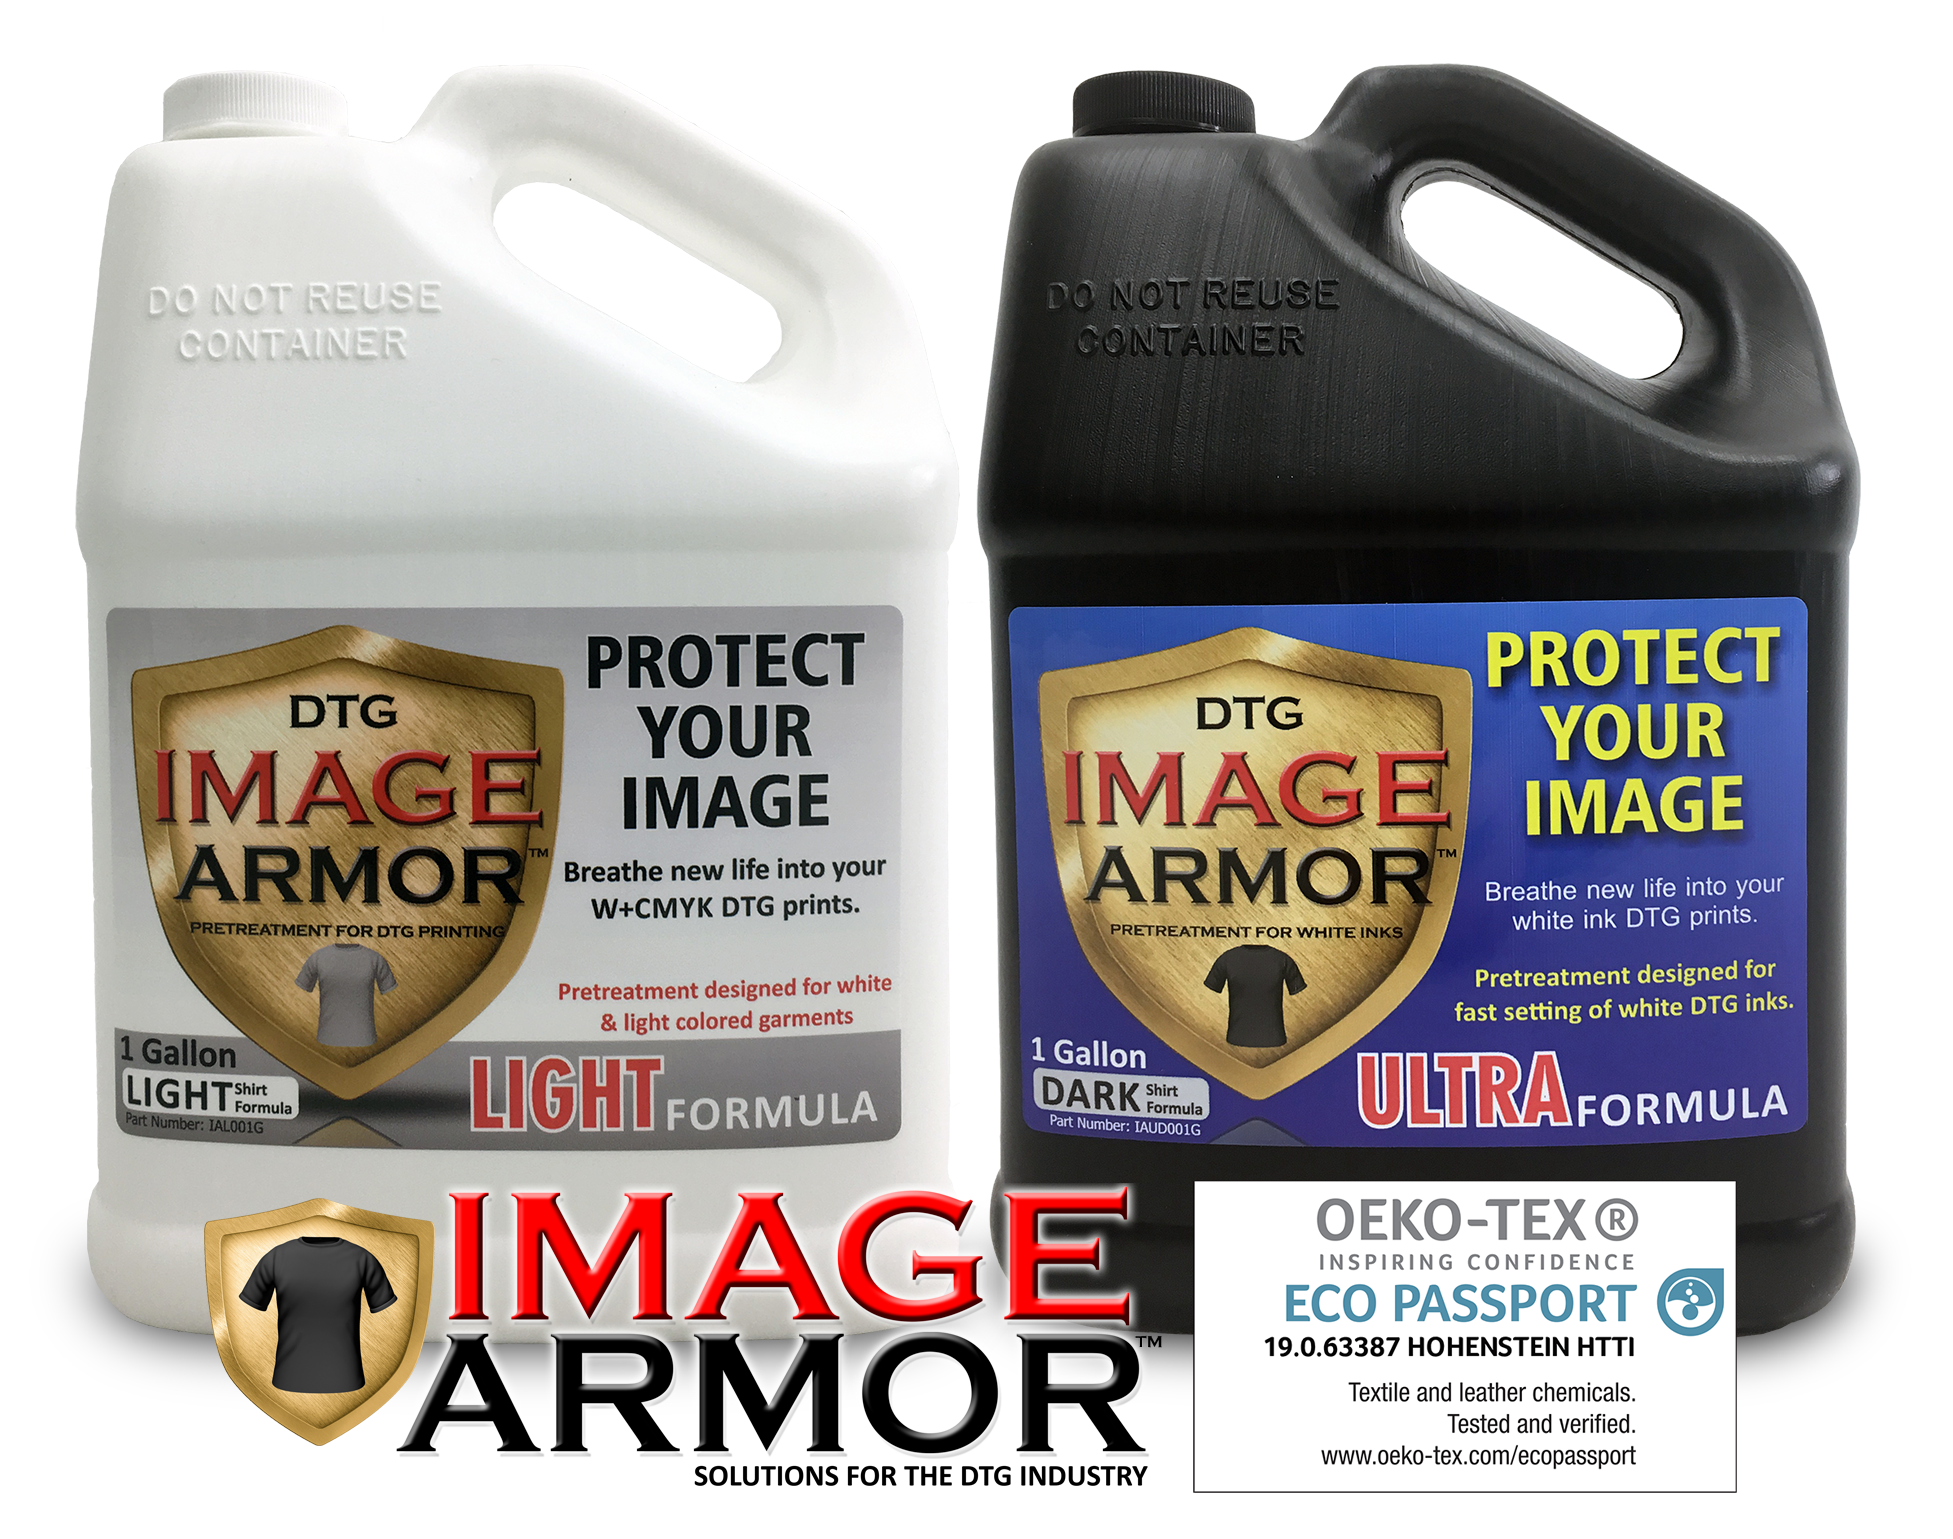 Image Armor Oeko-Tex Eco Passport Certified Products Image Armor